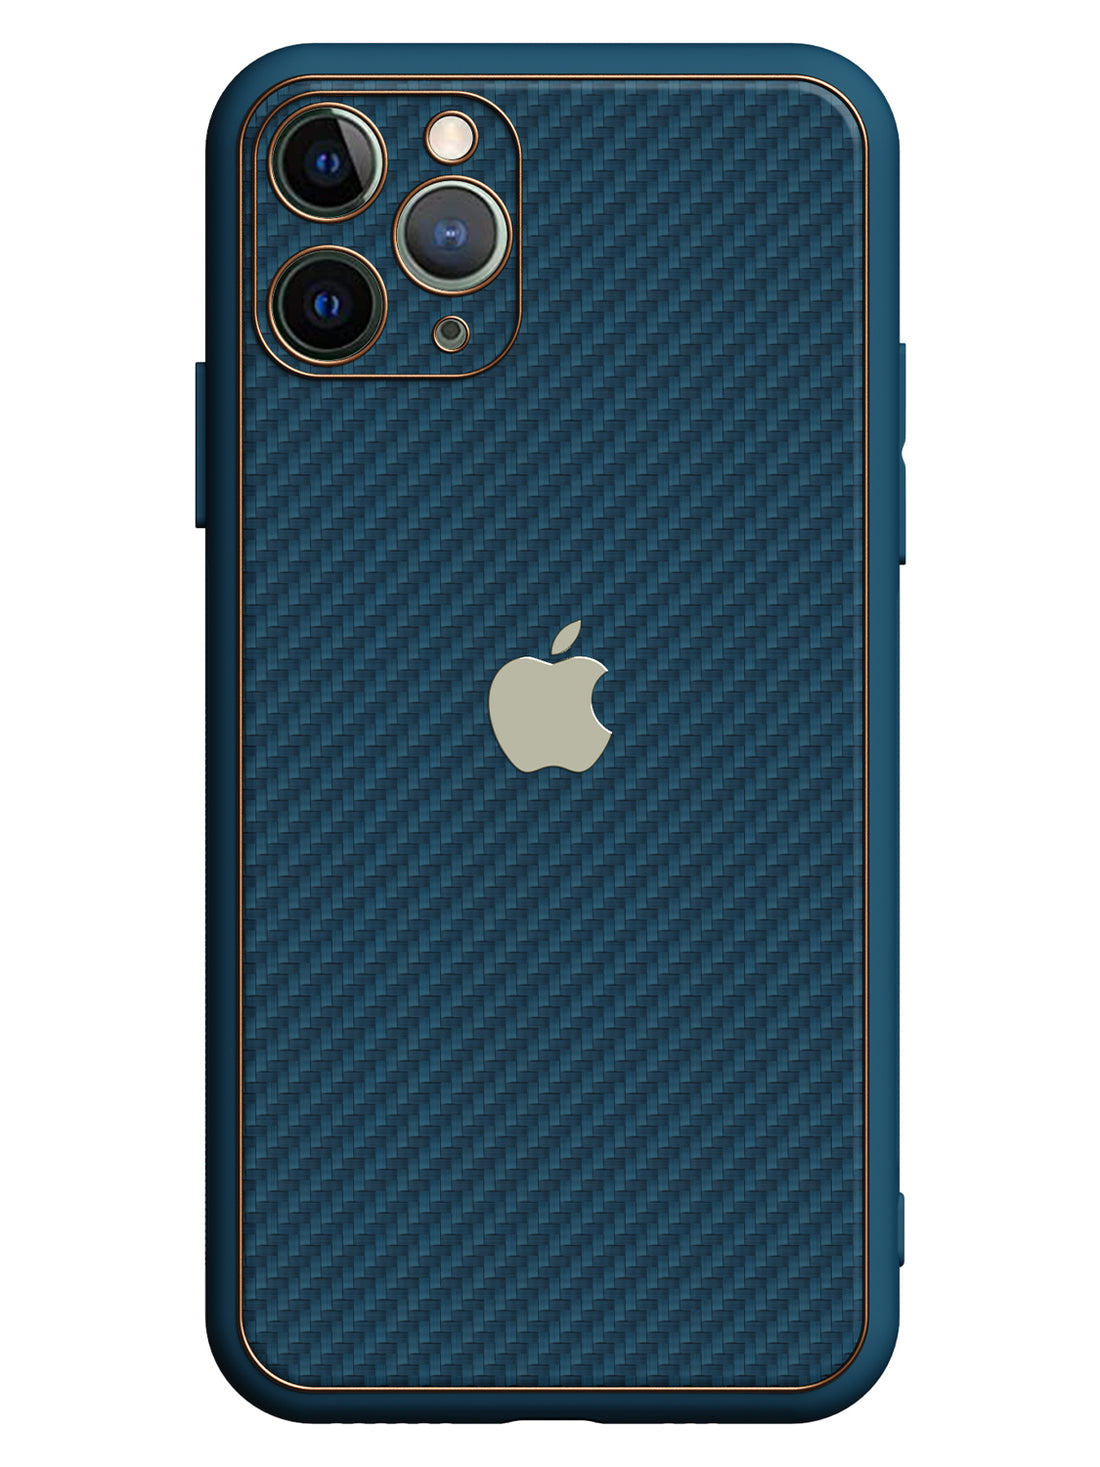 Carbon Leather Chrome Case - iPhone 11 Pro (Navy Blue)